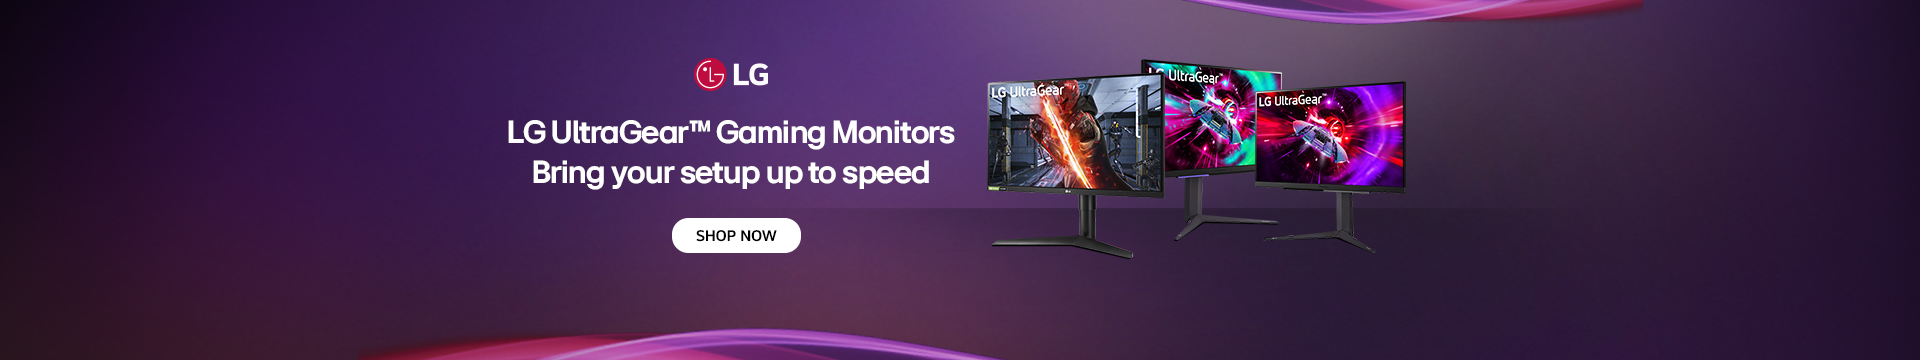 LG UltraGear Gaming Monitors